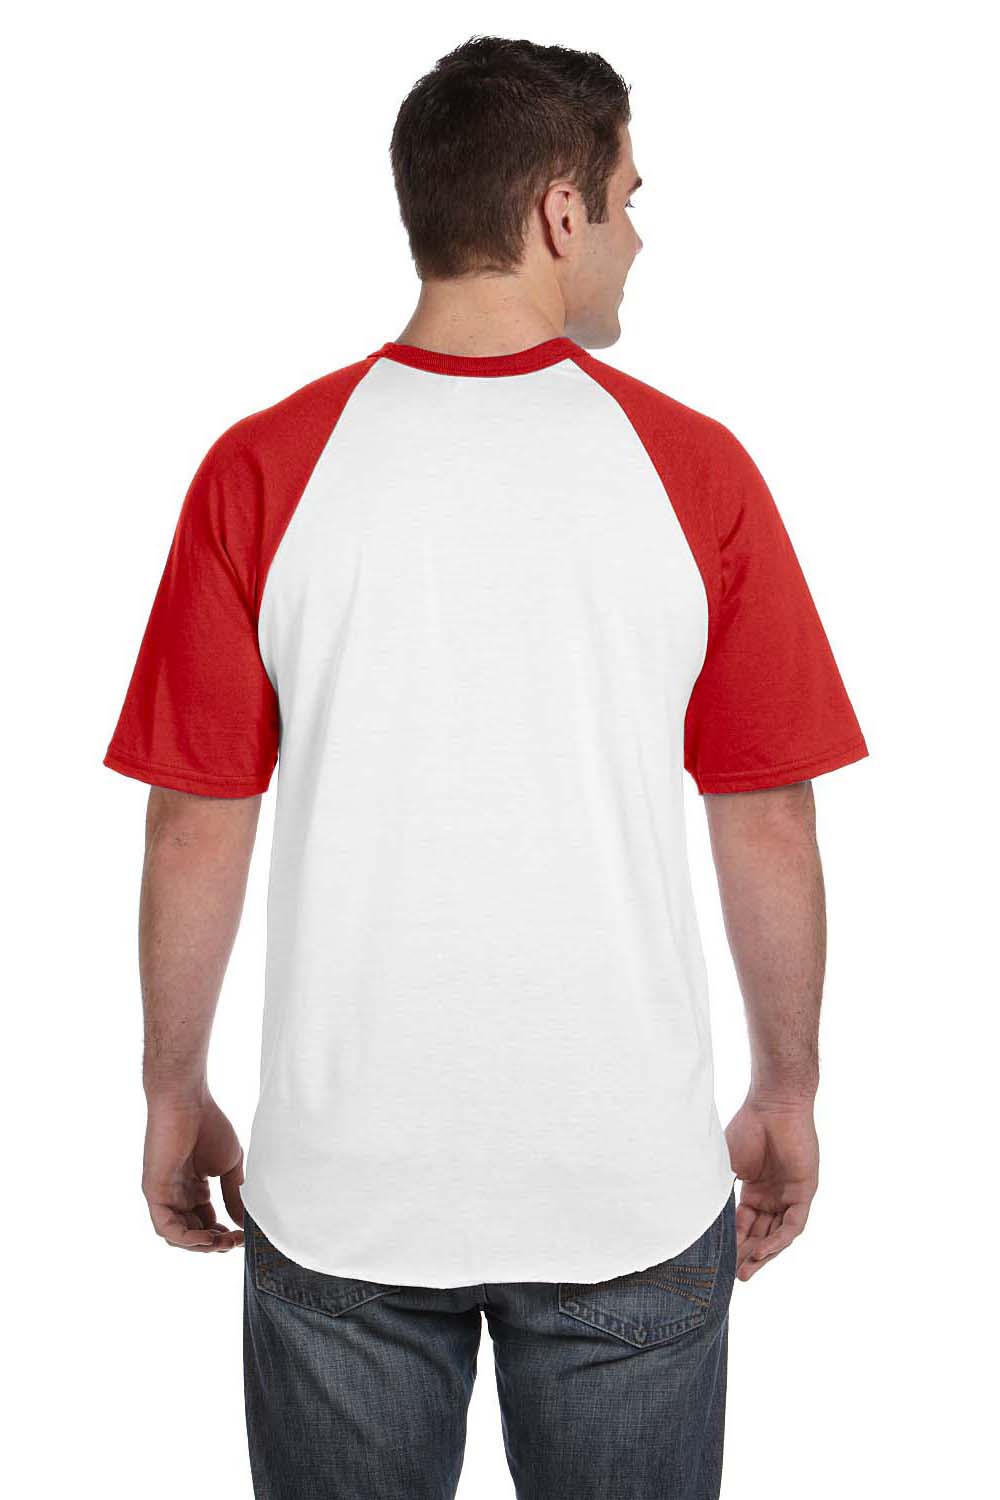 Augusta Sportswear 423 Mens Short Sleeve Crewneck T-Shirt White/Red Model Back